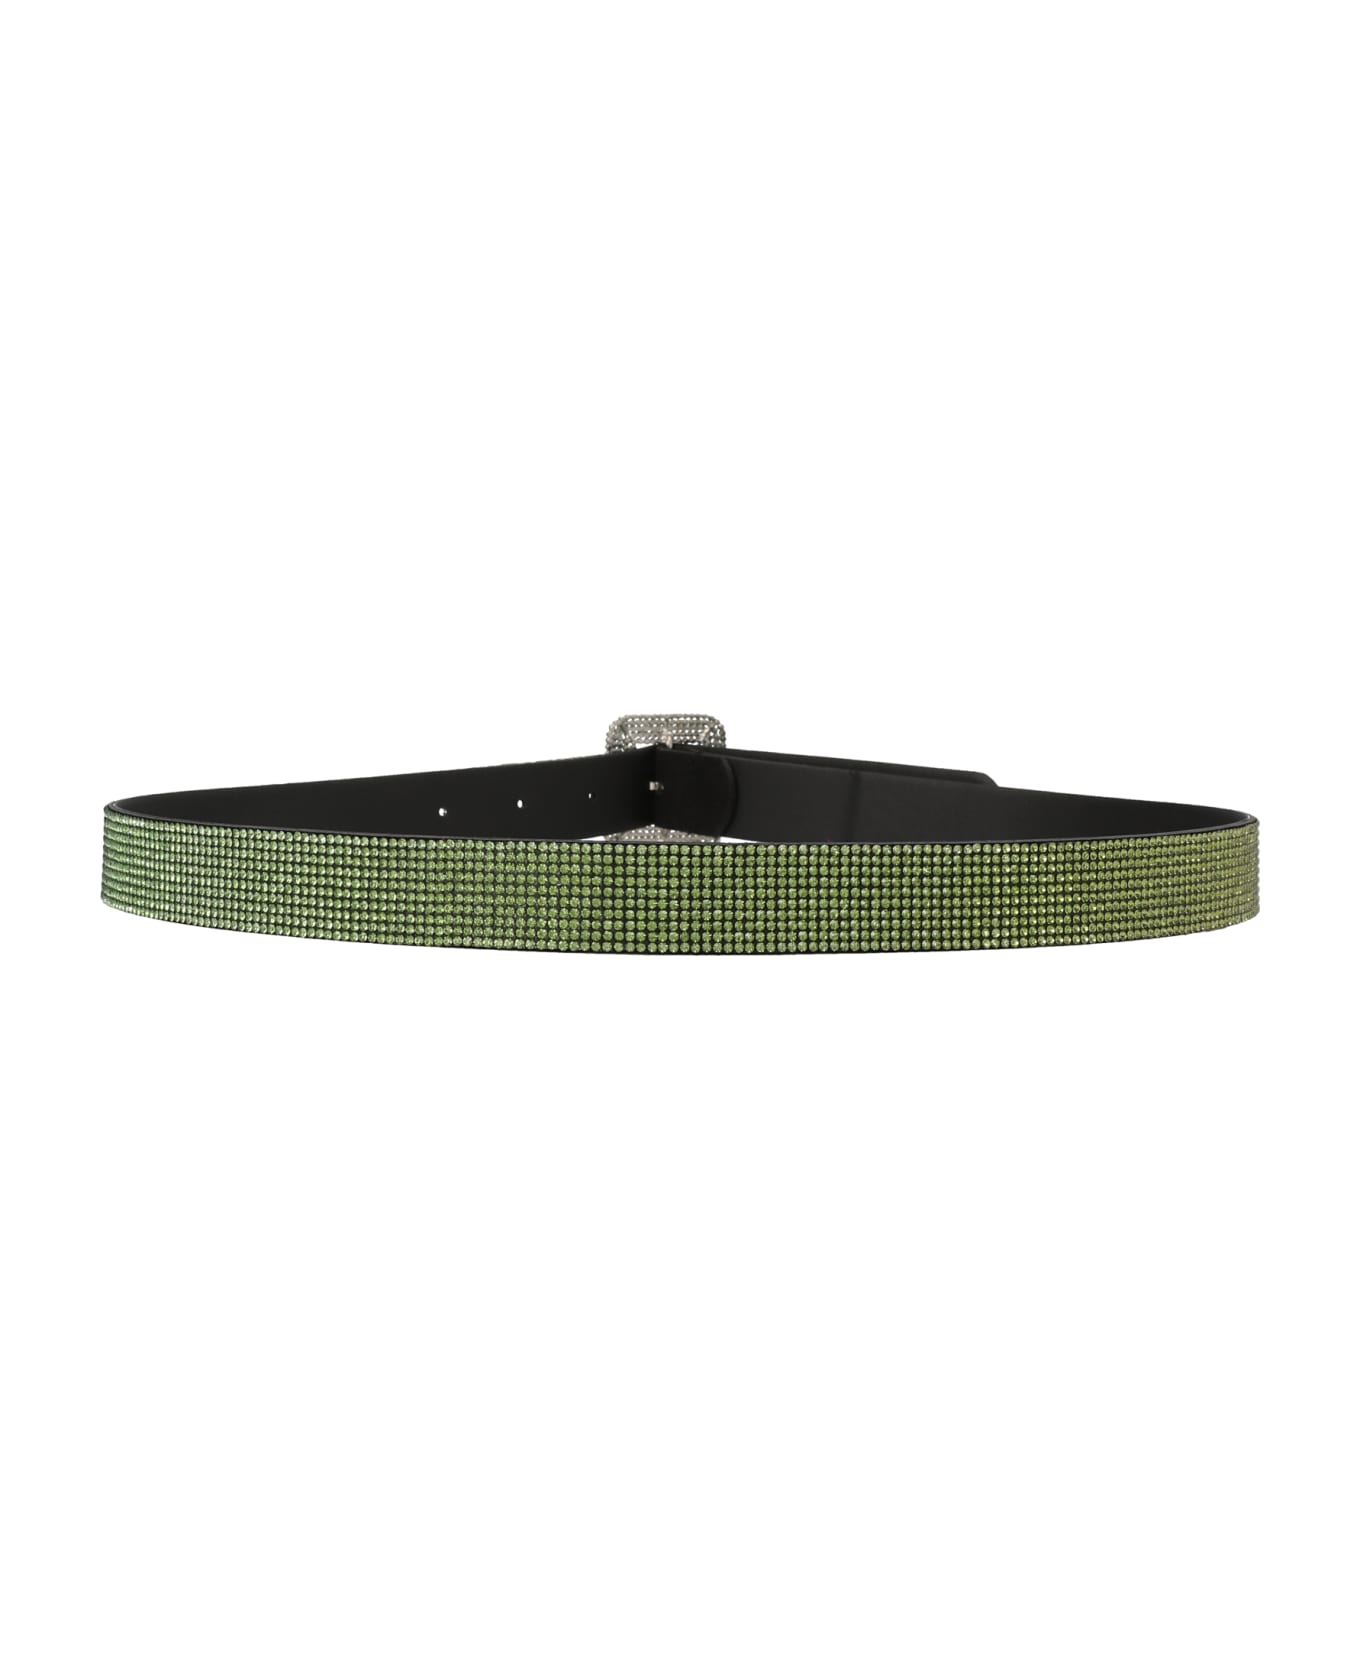 Pinko Crystal Belt - Green